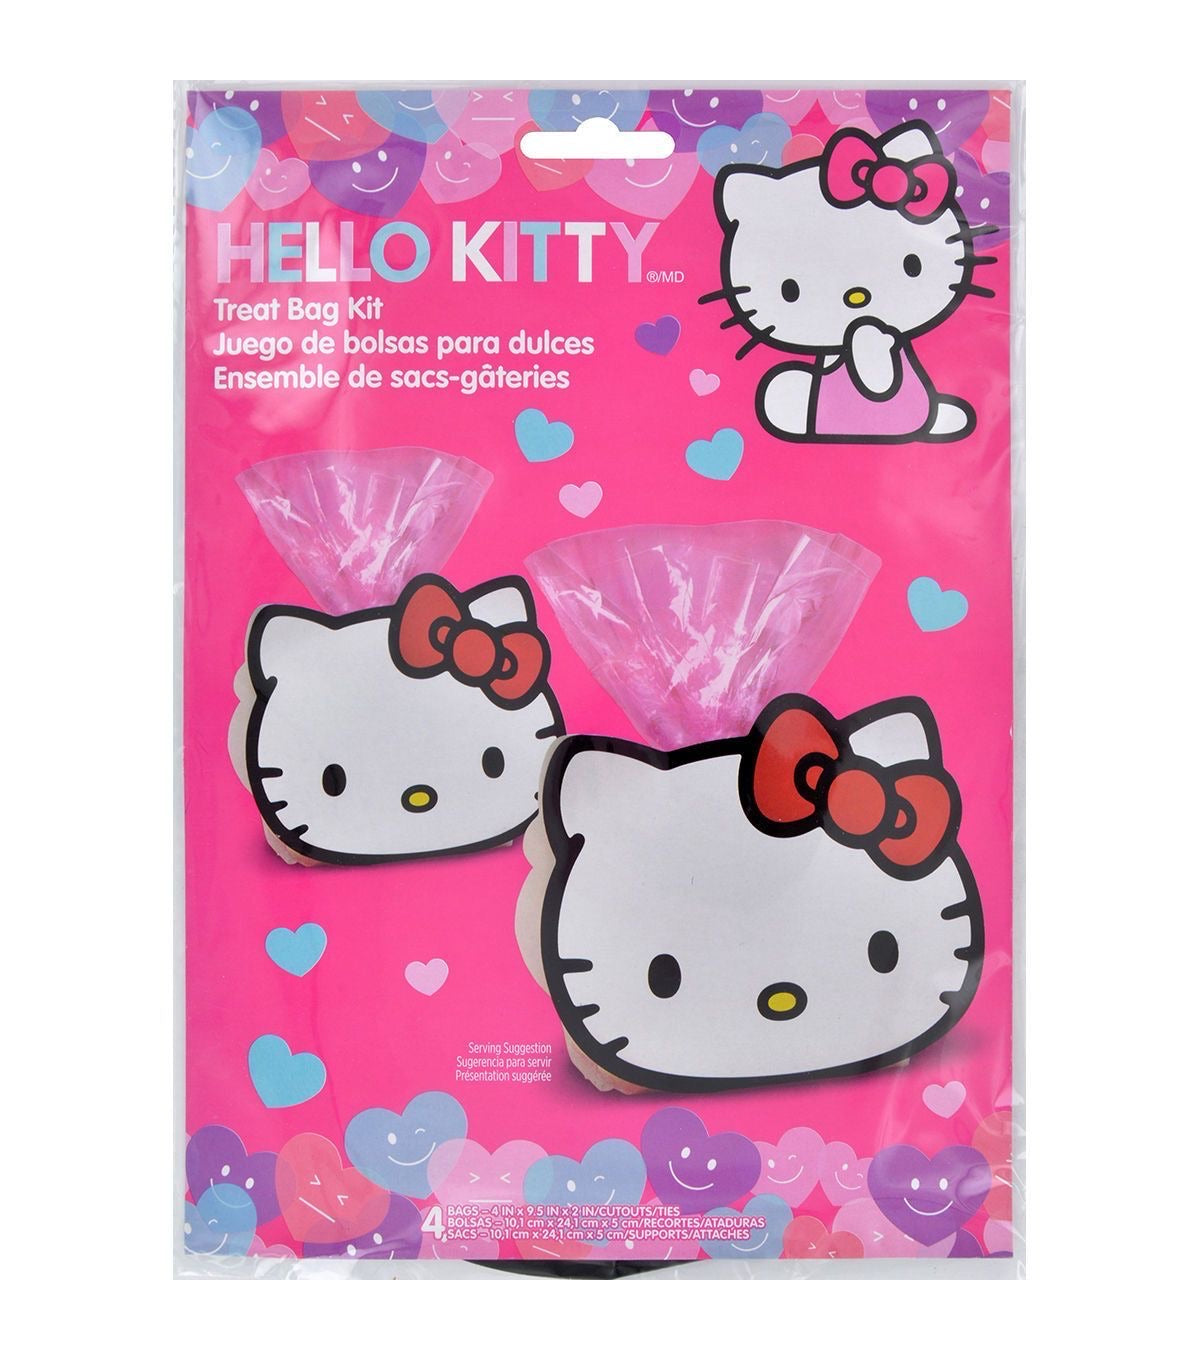 Hello kitty treat bag kit